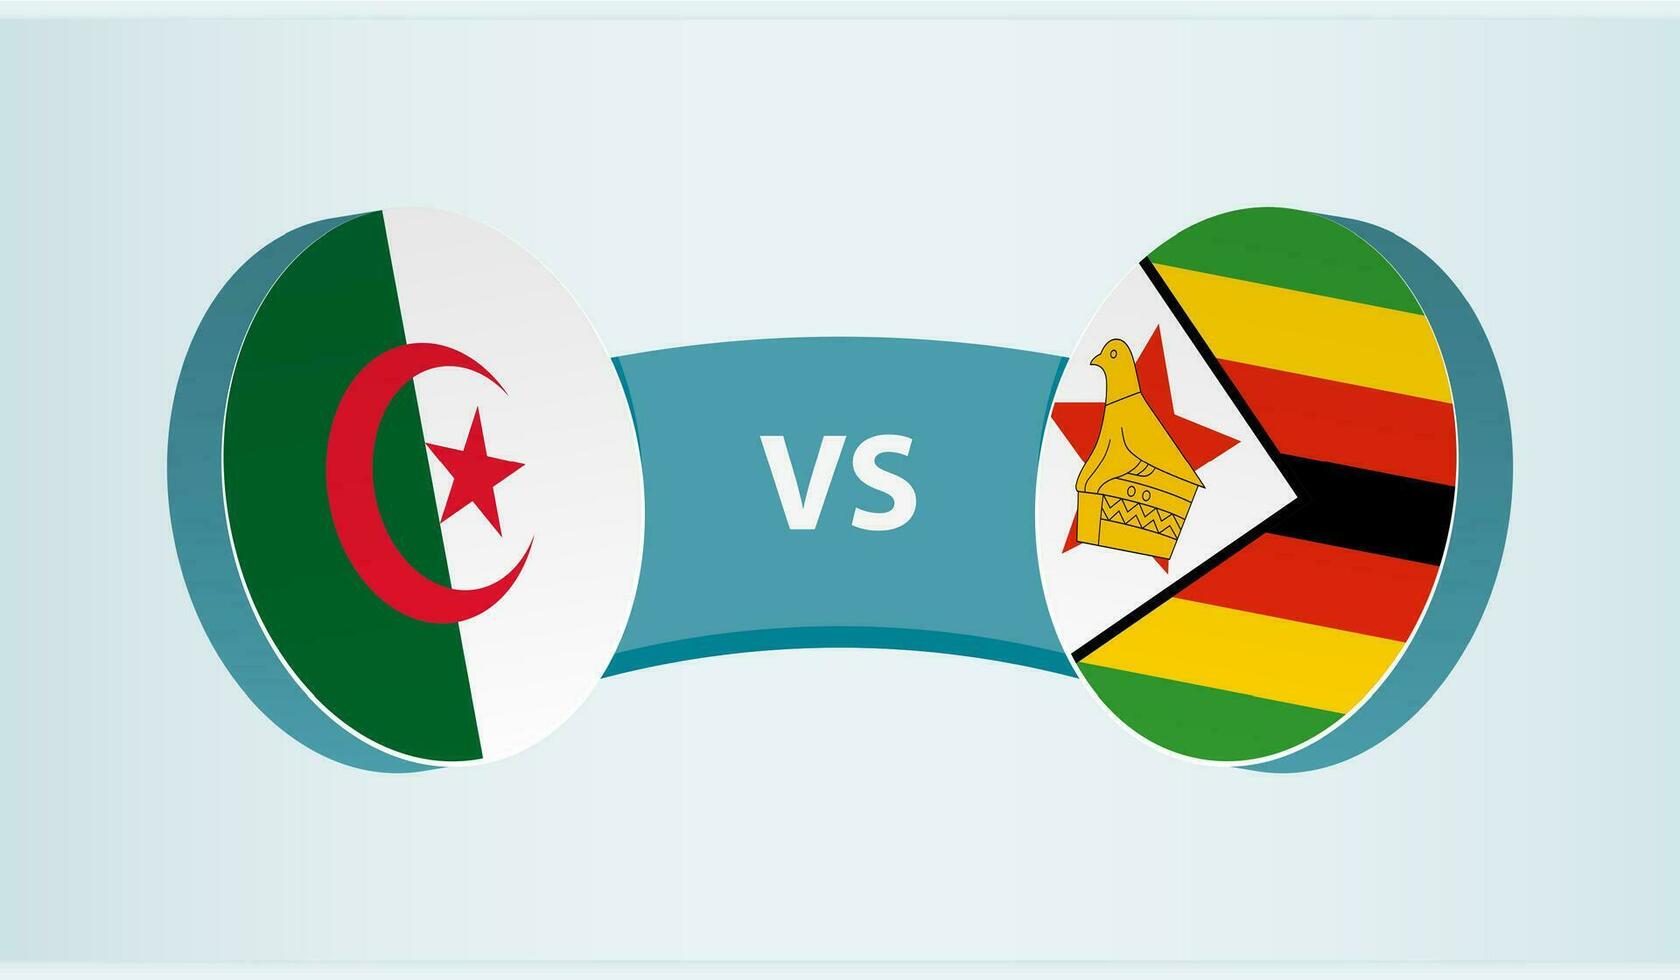 Algeria versus Zimbabwe, team sports competition concept. vector